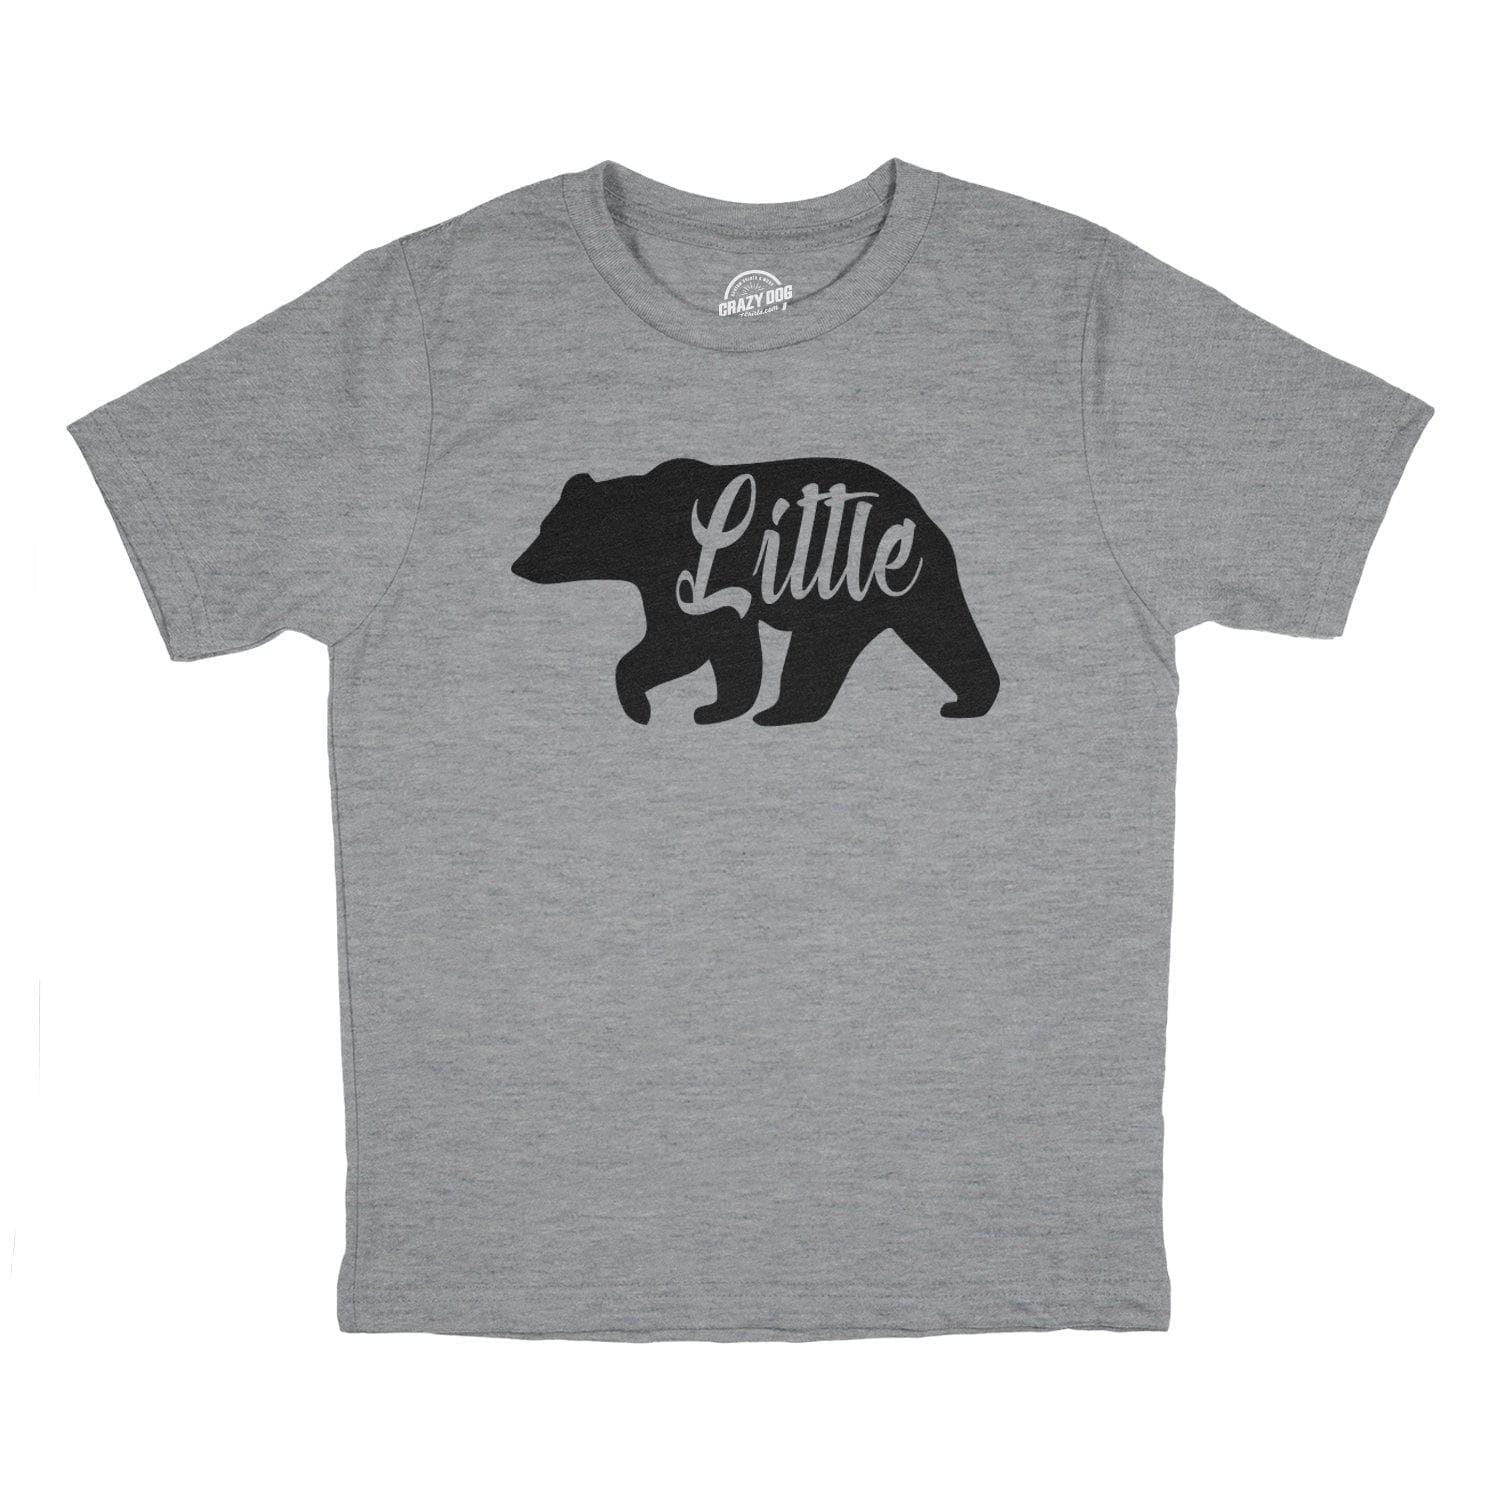 Little Bear Youth Tshirt  -  Crazy Dog T-Shirts